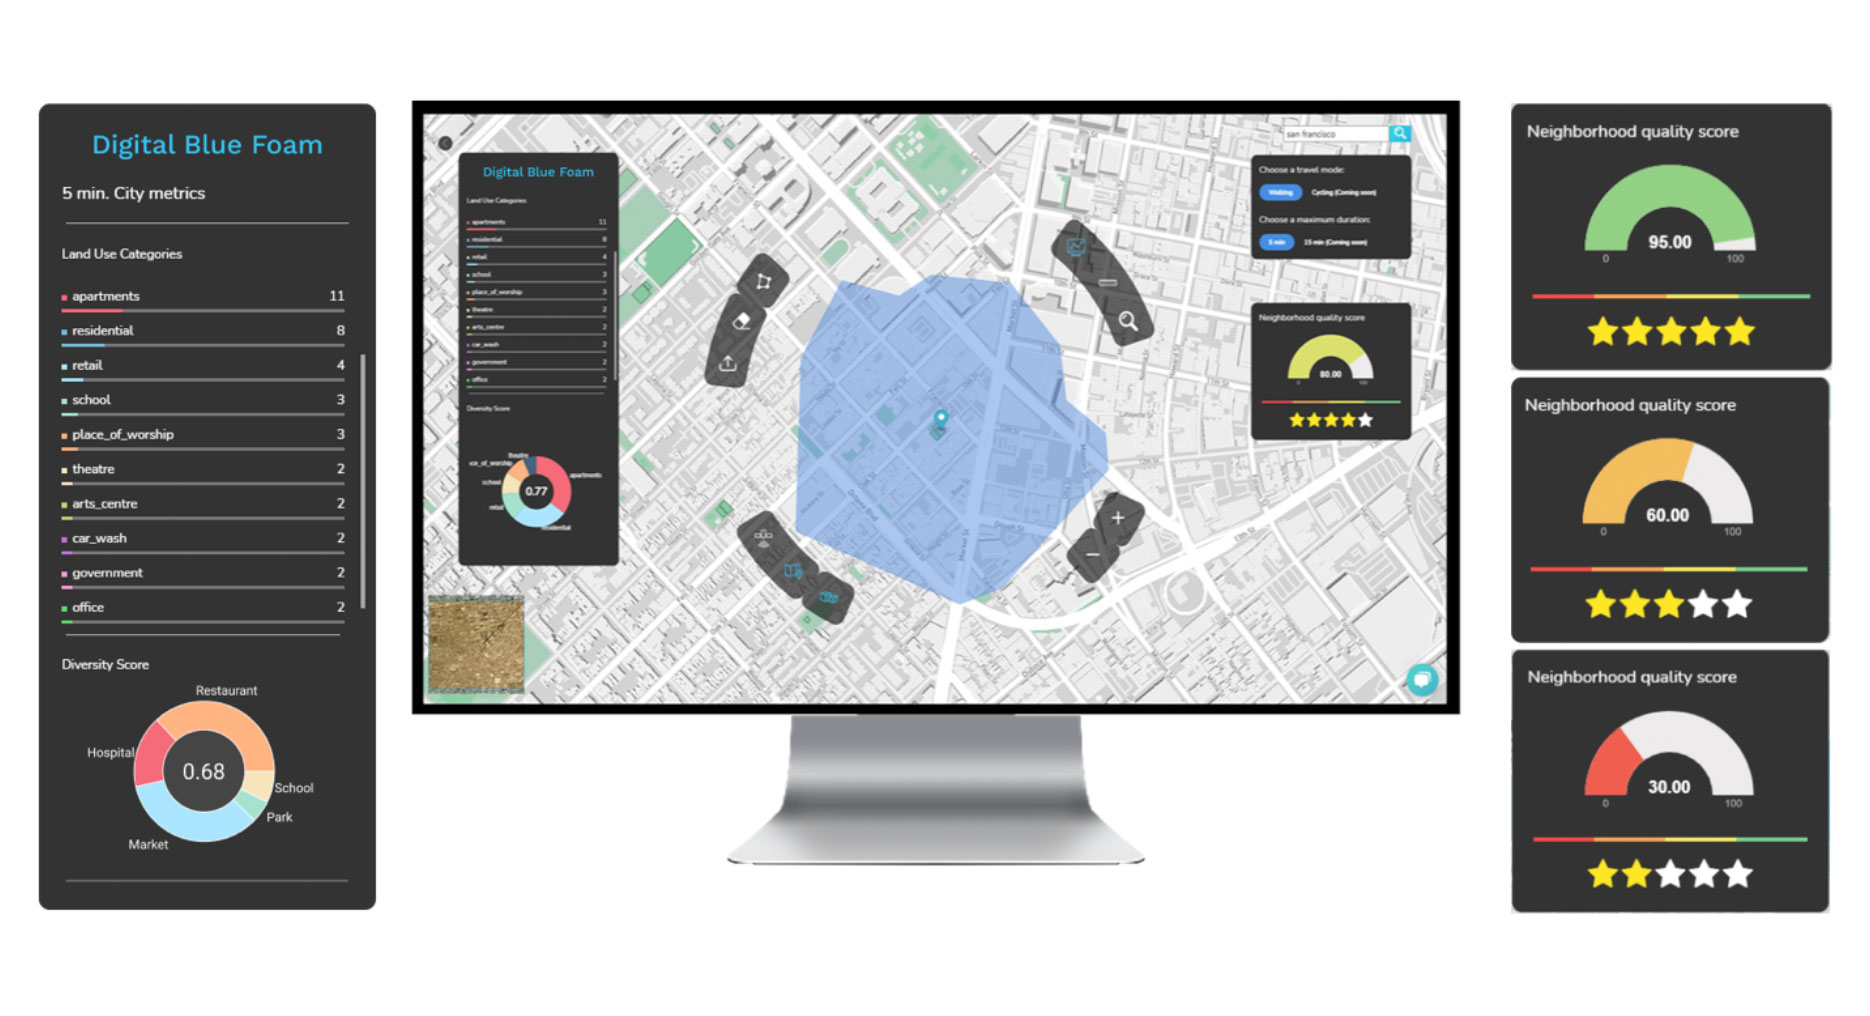 Digital Blue Foam Isochrone Neighbourhood Quality Score for a 15 Minute City